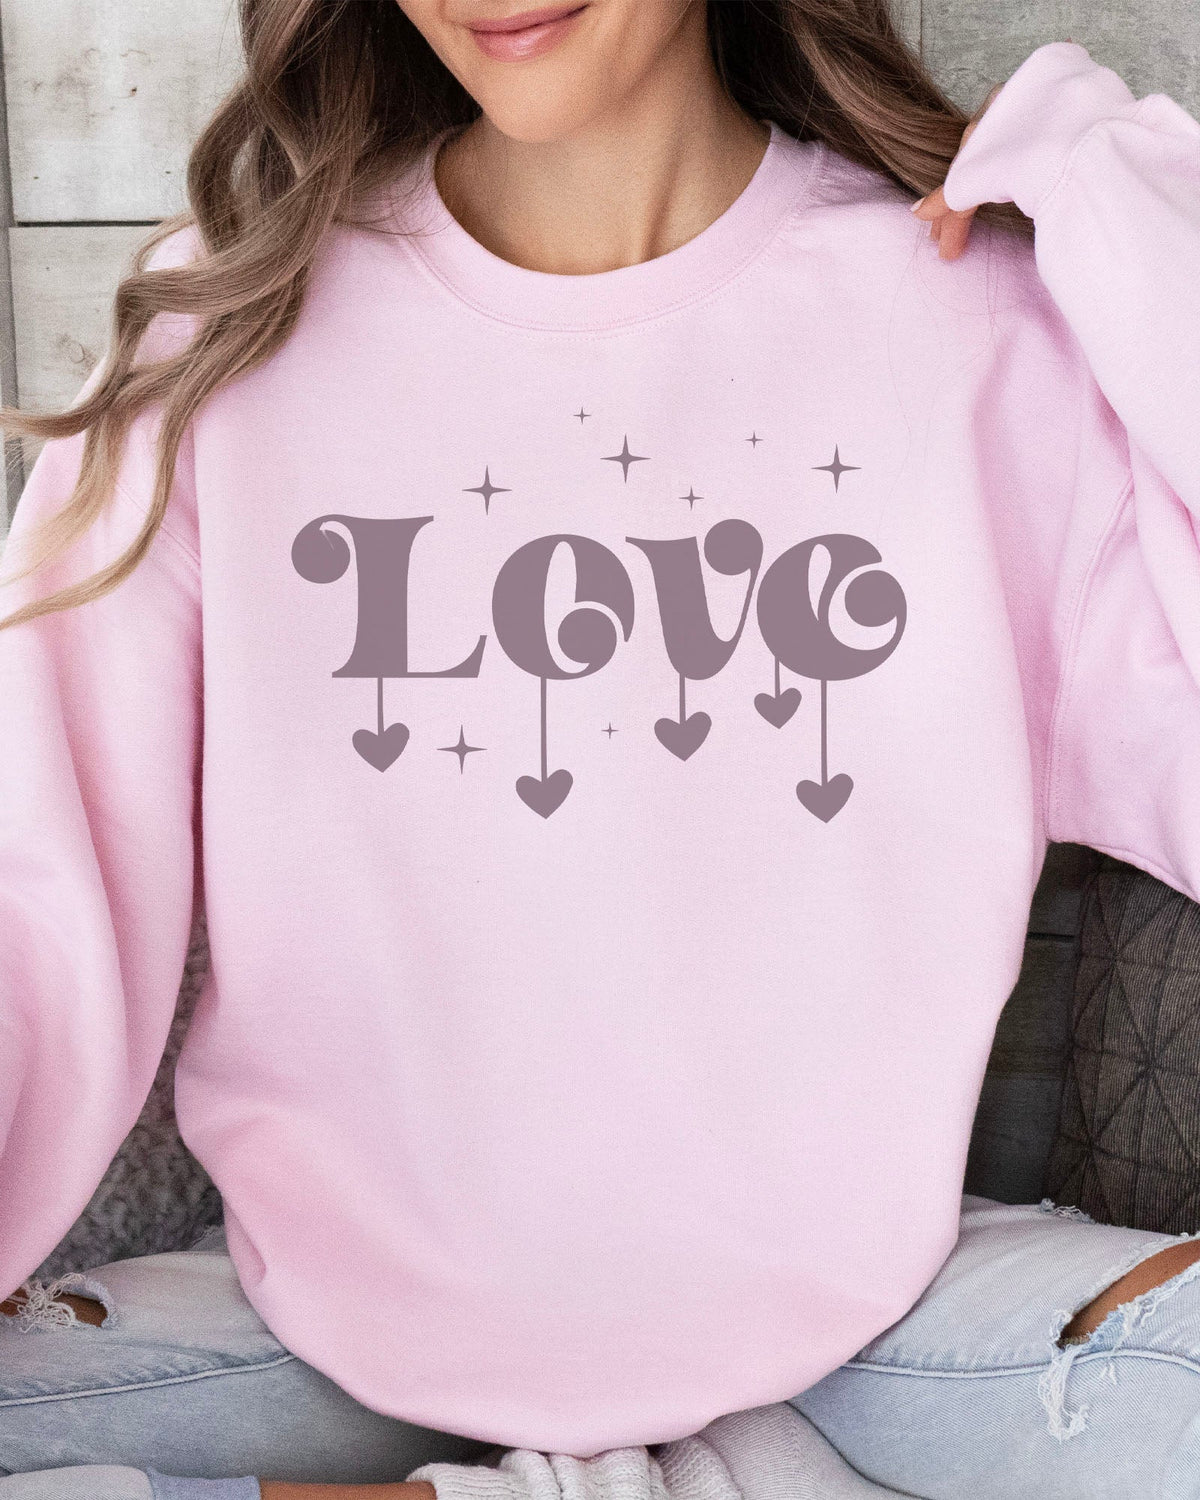 Hearts of Love Sweatshirt